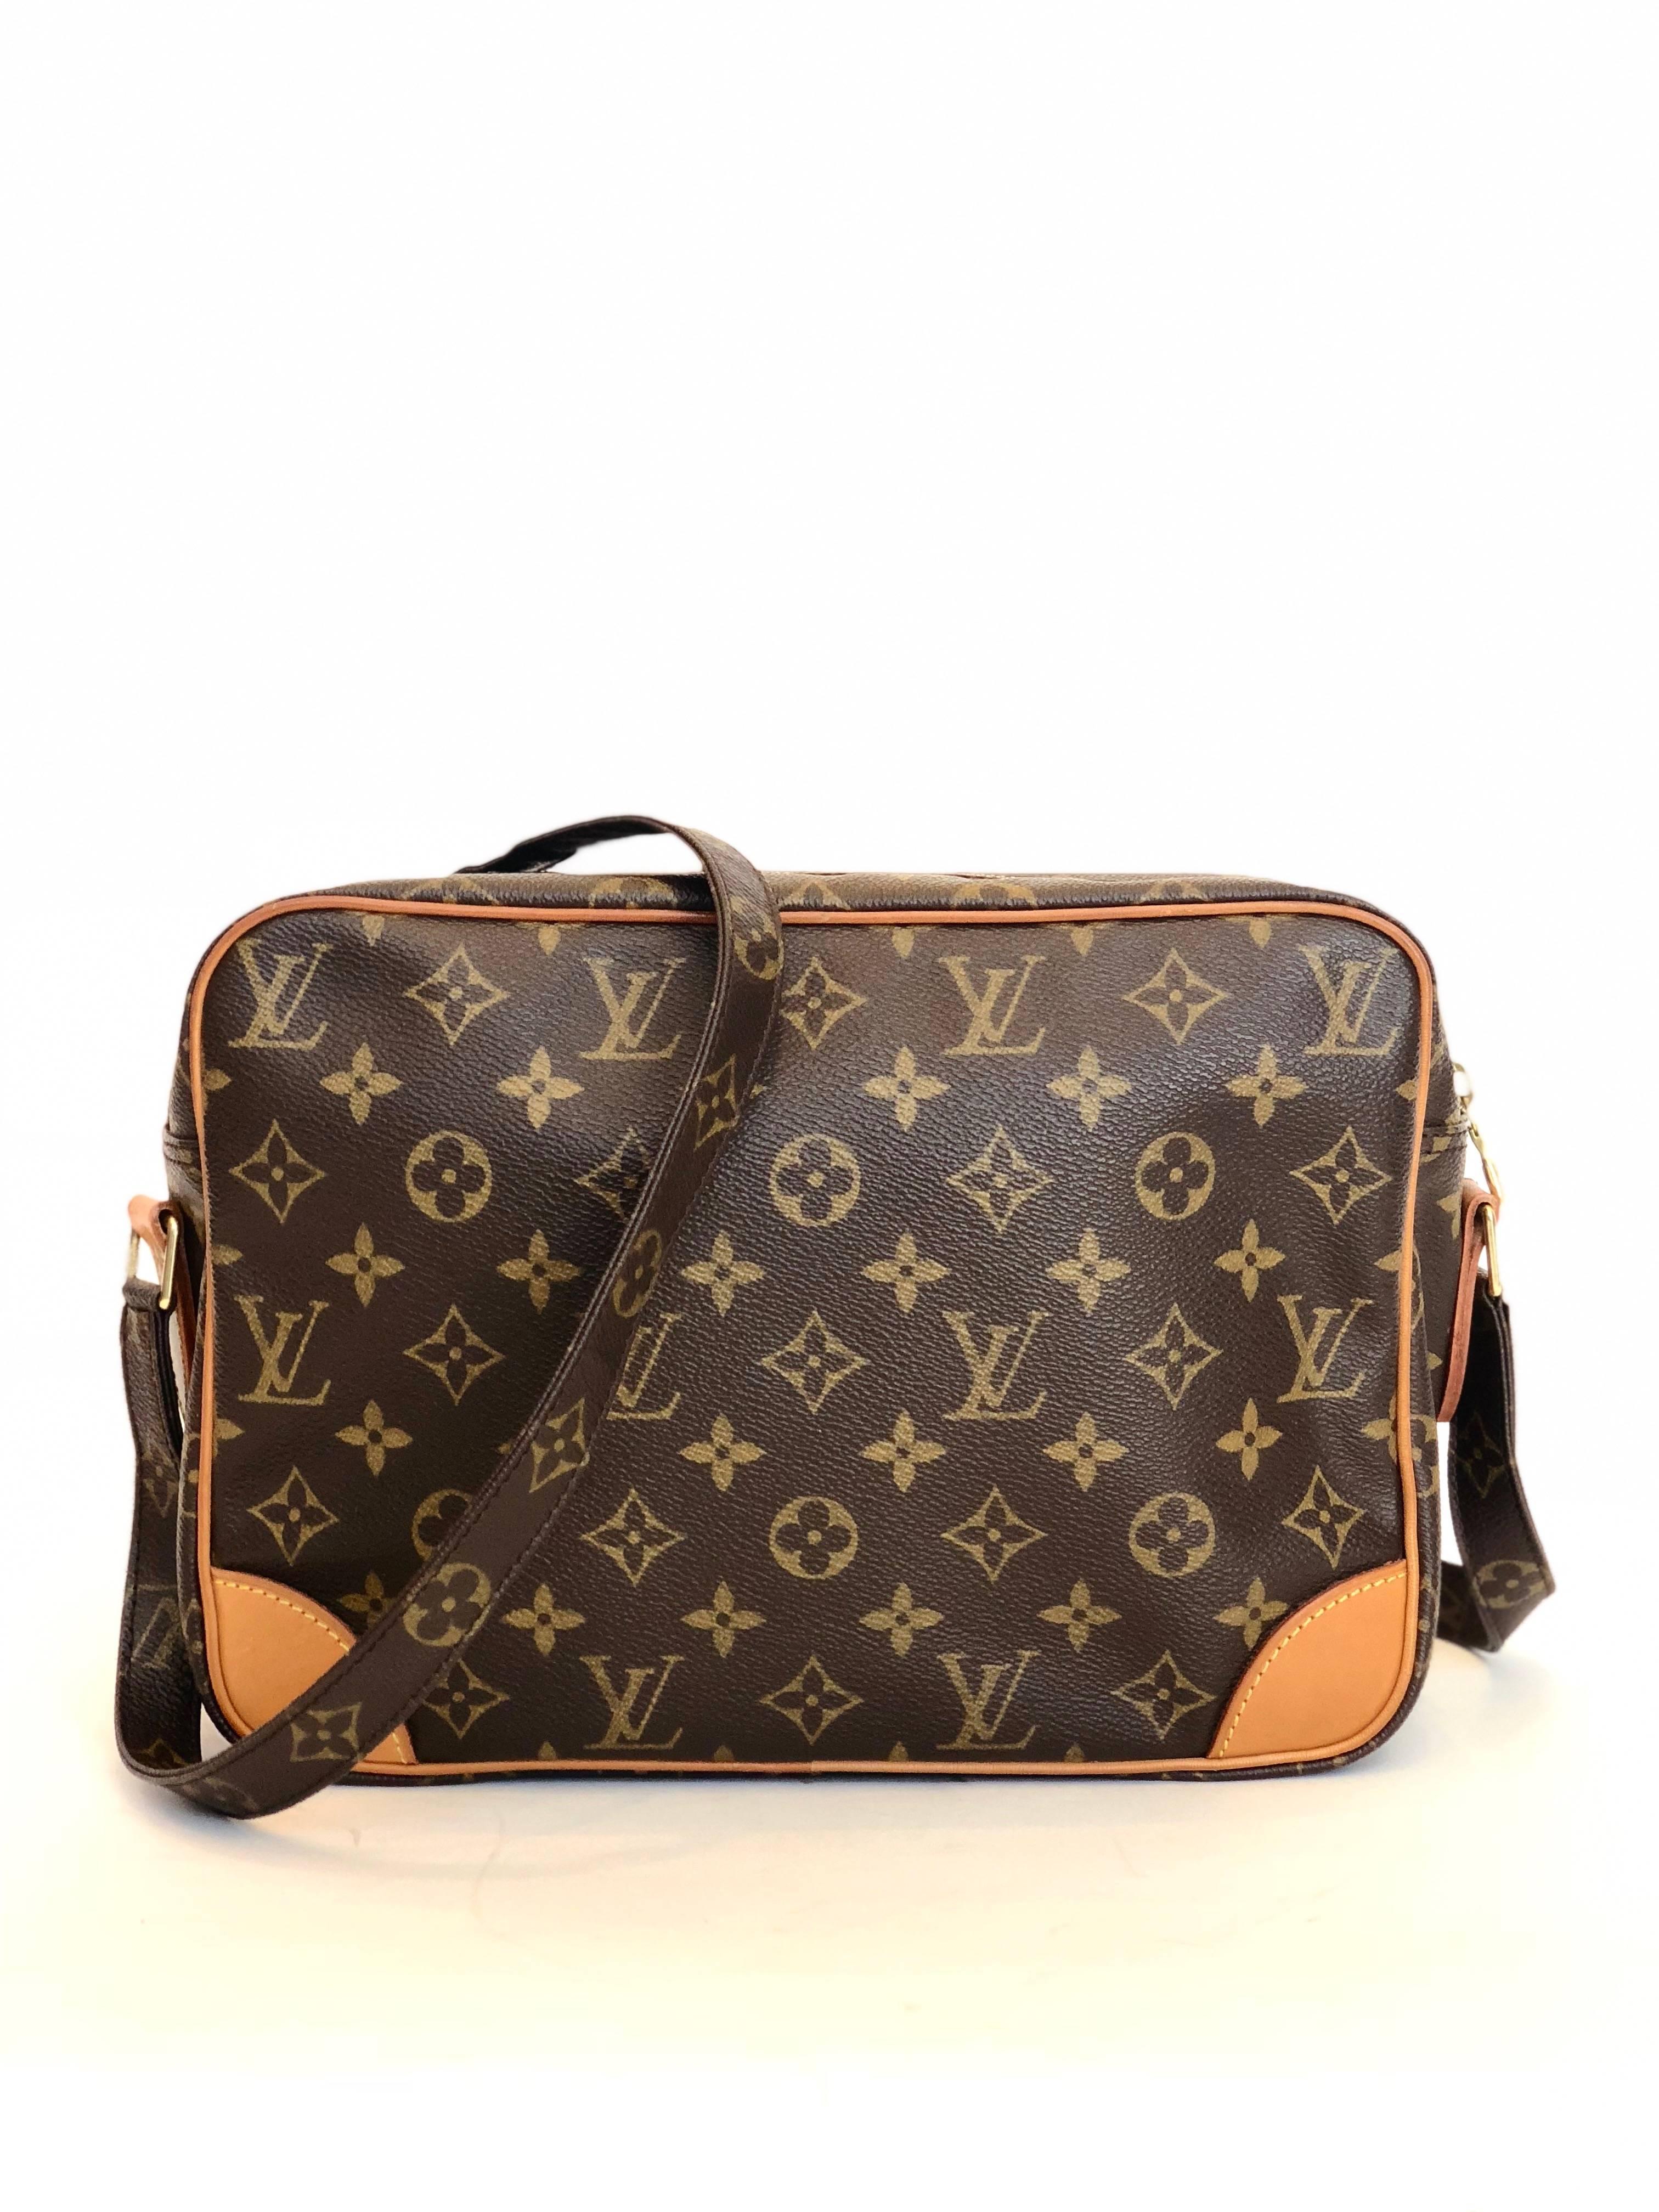 Louis Vuitton Monogram Canvas Cross Body / Shoulder Bag with front pocket. In excellent condition. 

*MEASUREMENTS*
Length: 11